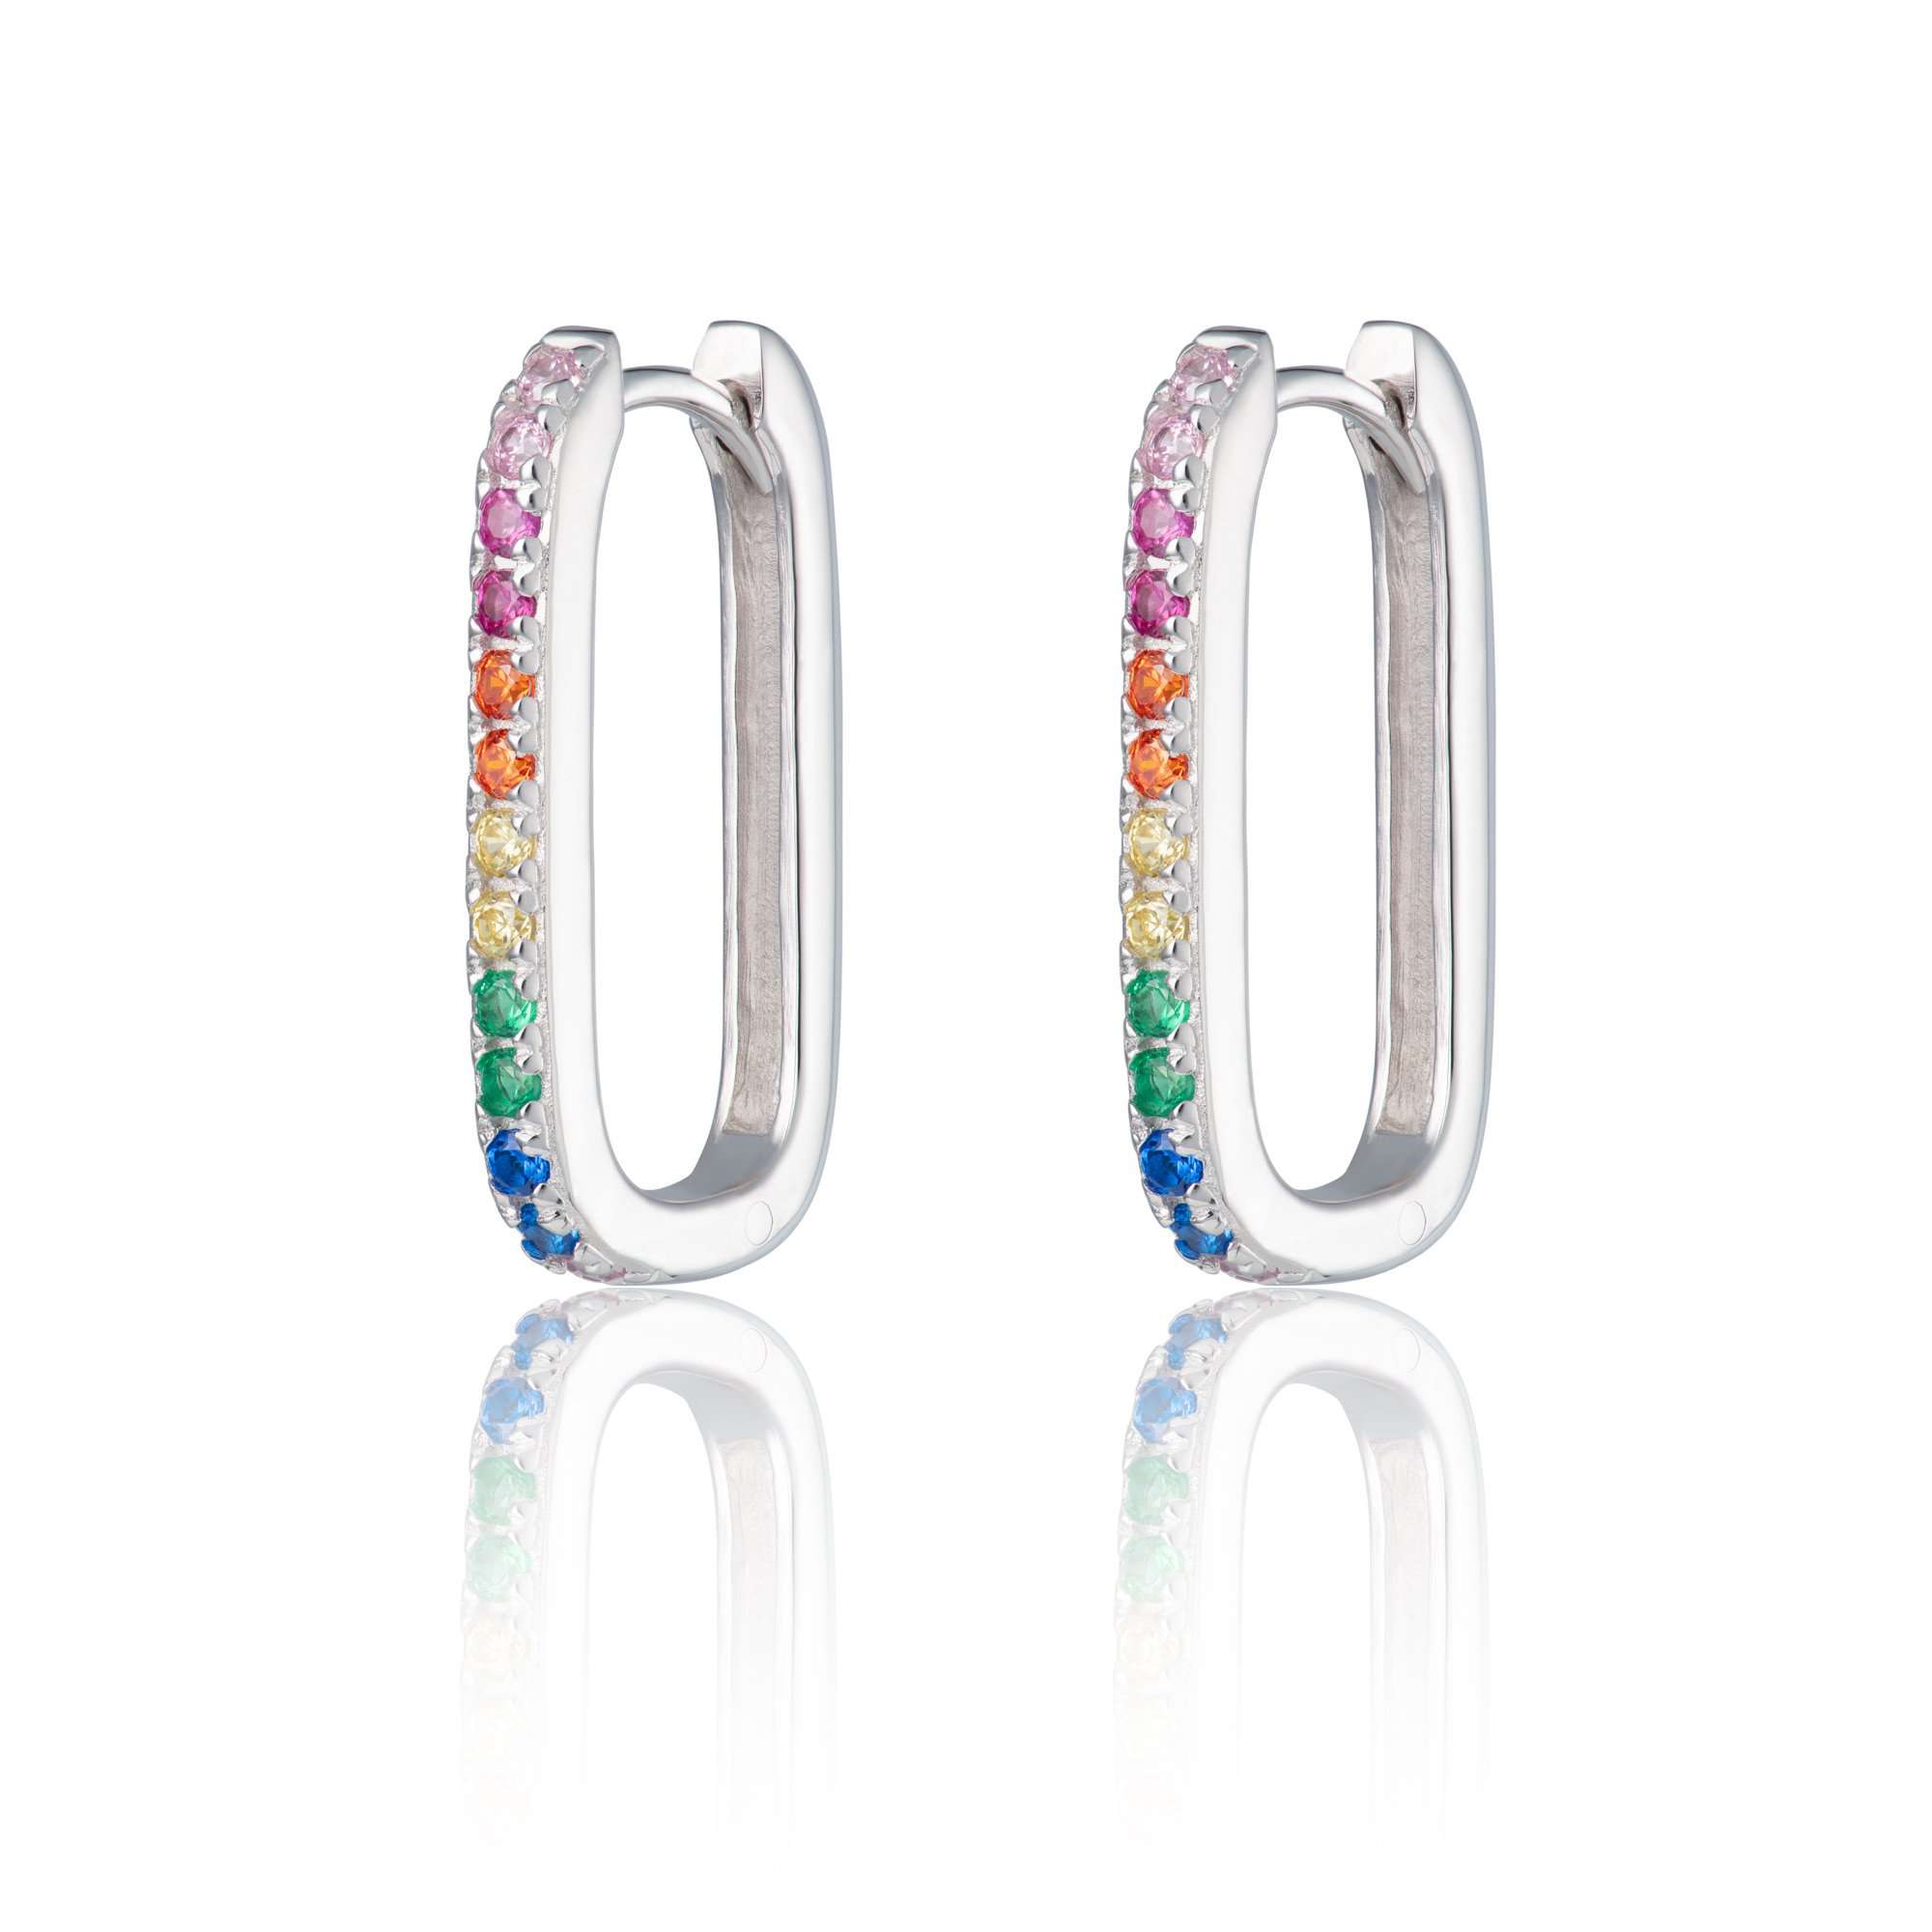 Oval Hoop Earrings with Rainbow Stones